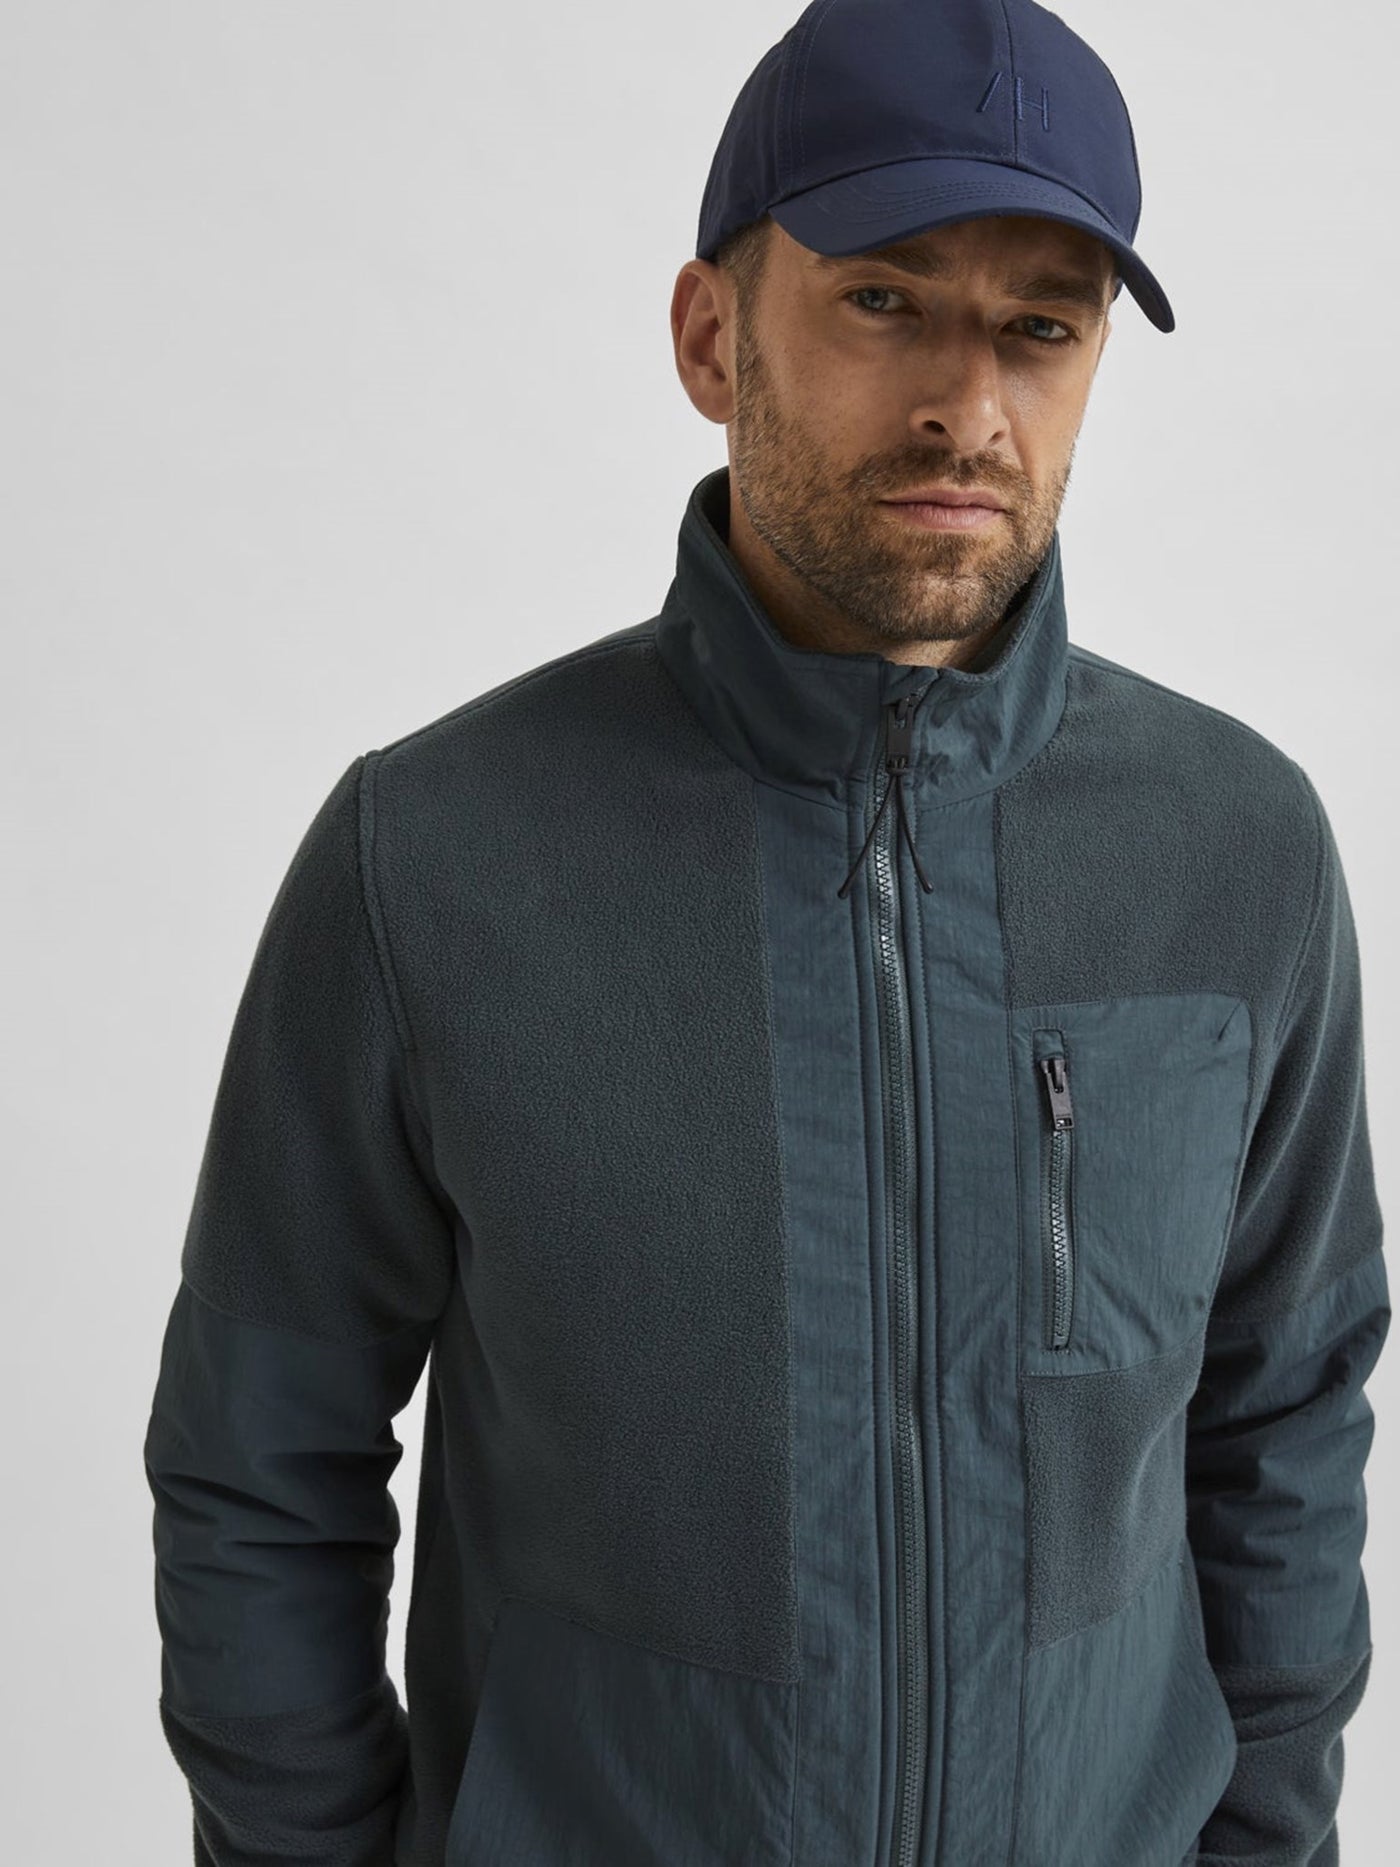 Nohr Fleece Jacket - Urban Chic - Selected Homme 2